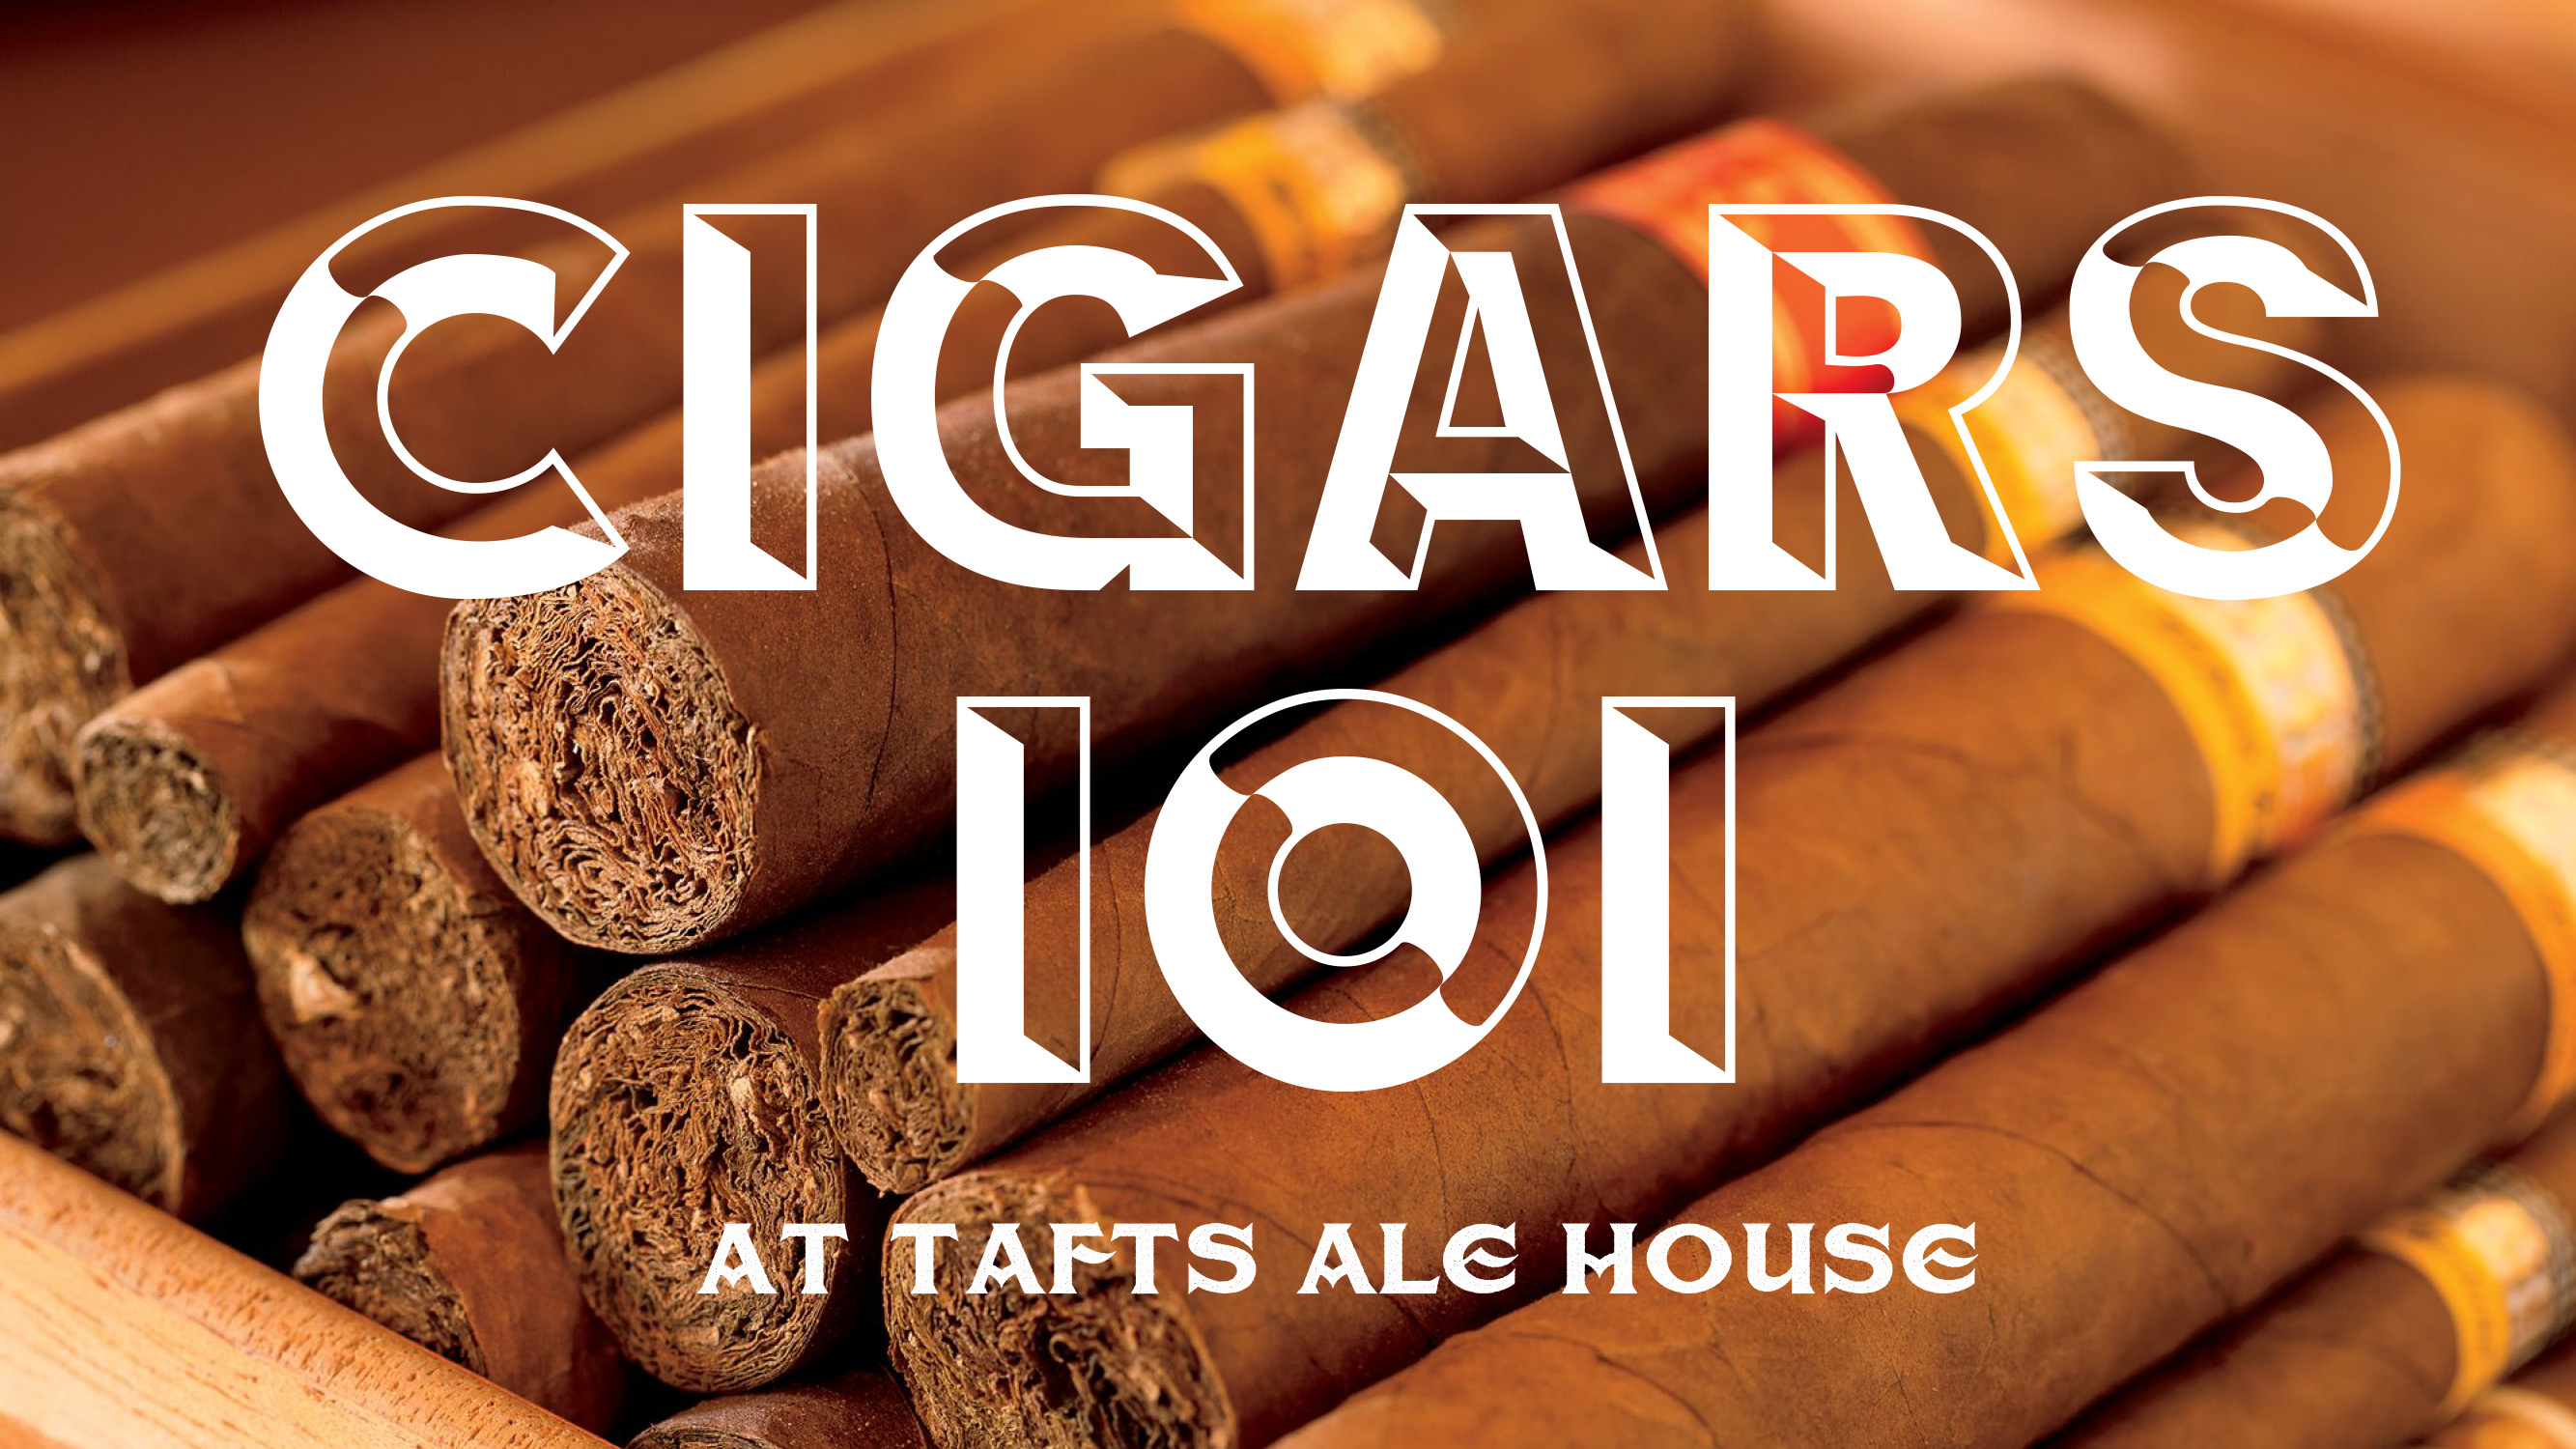 Cigars 101 Class At Taft's - Cincinnati Event